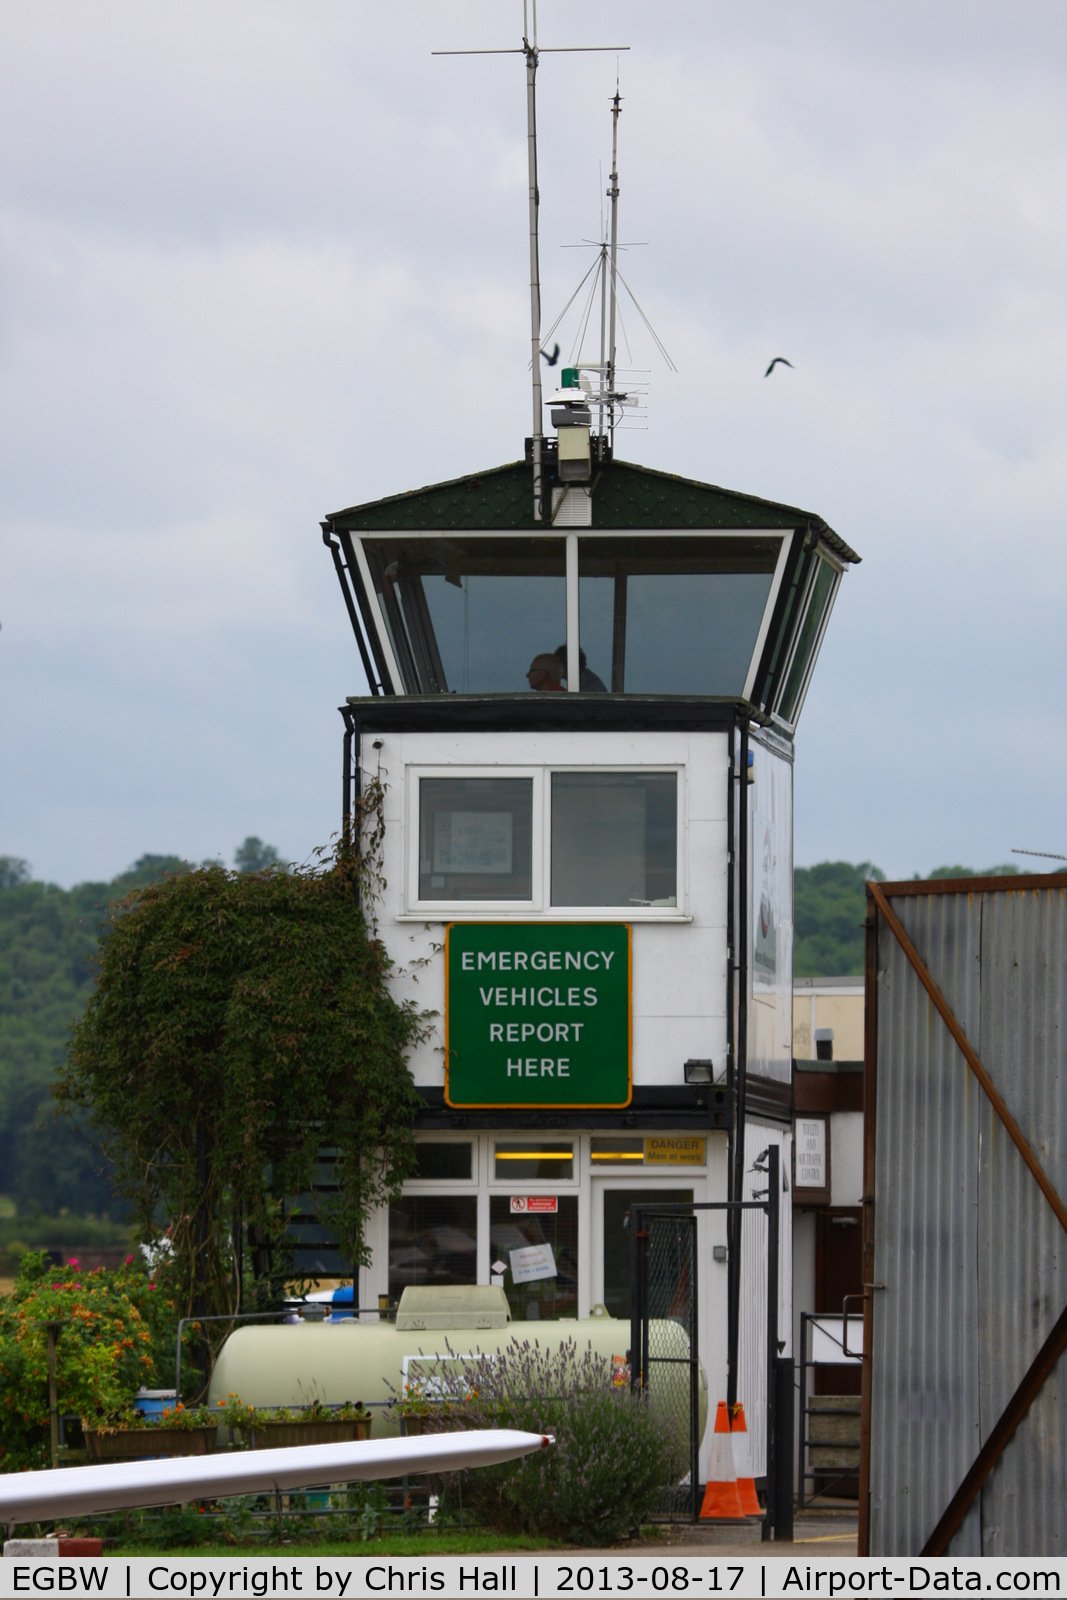 Wellesbourne Mountford Airfield Airport, Wellesbourne, England United Kingdom (EGBW) - Wellesbourne Mountford tower